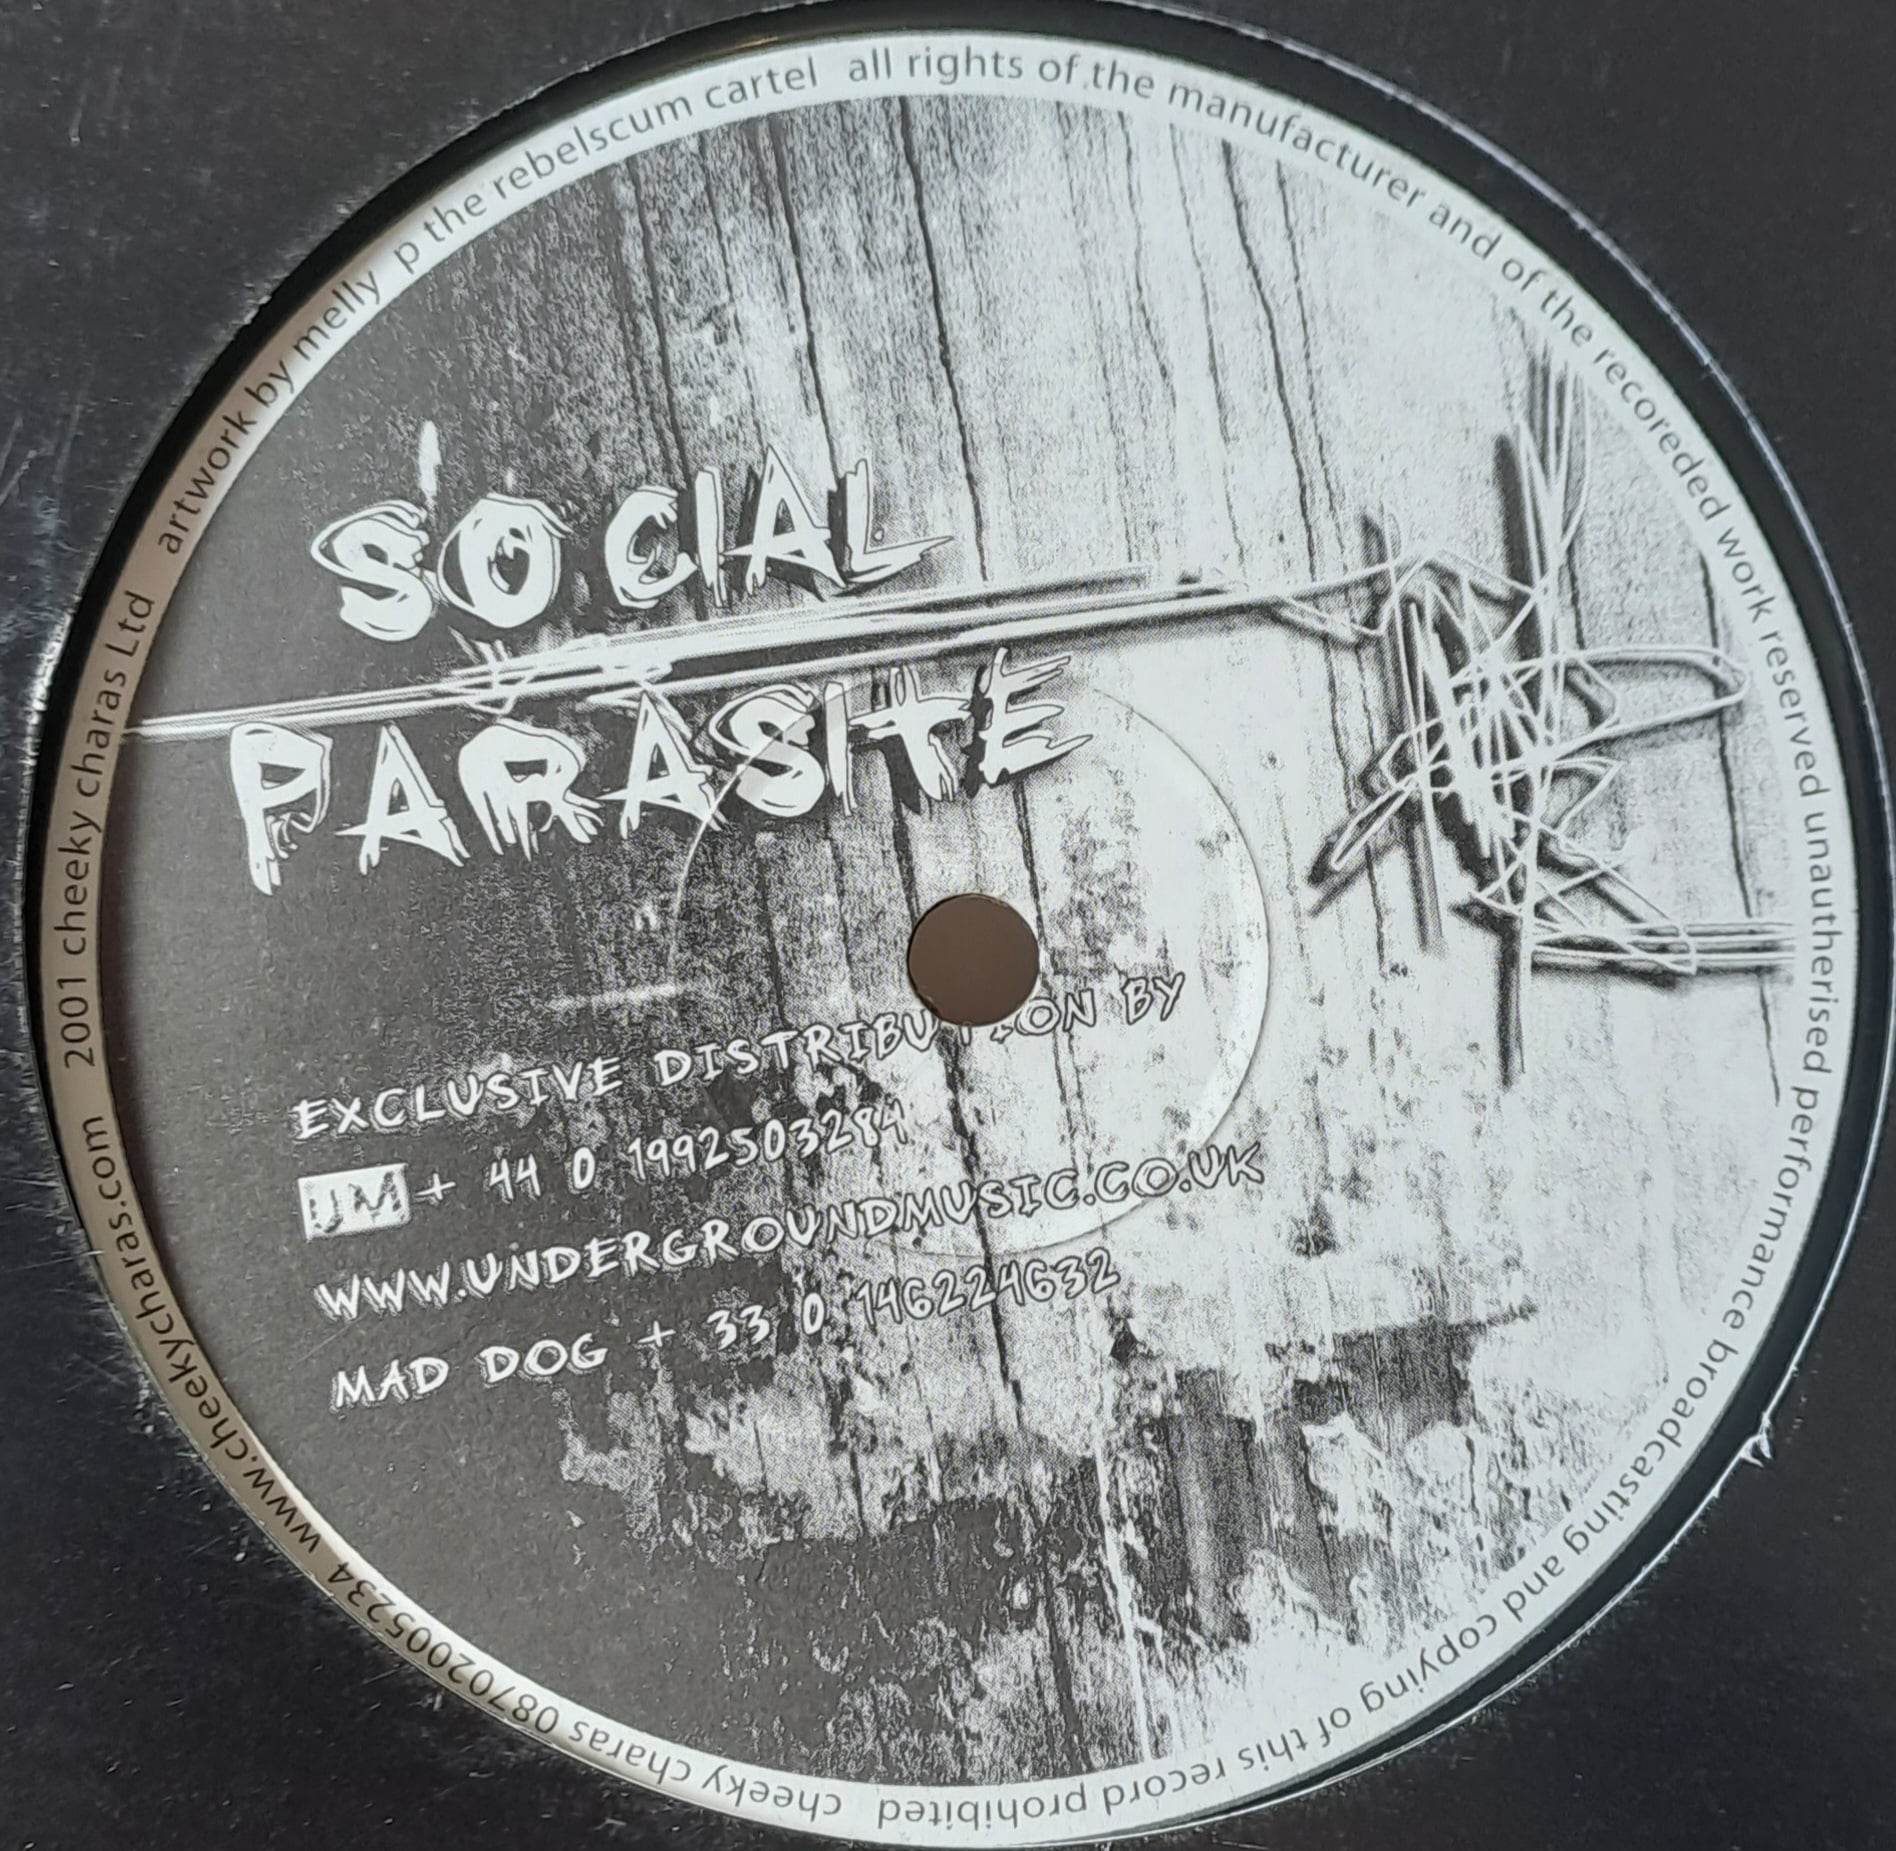 Social Parasite 10 - vinyle doomcore